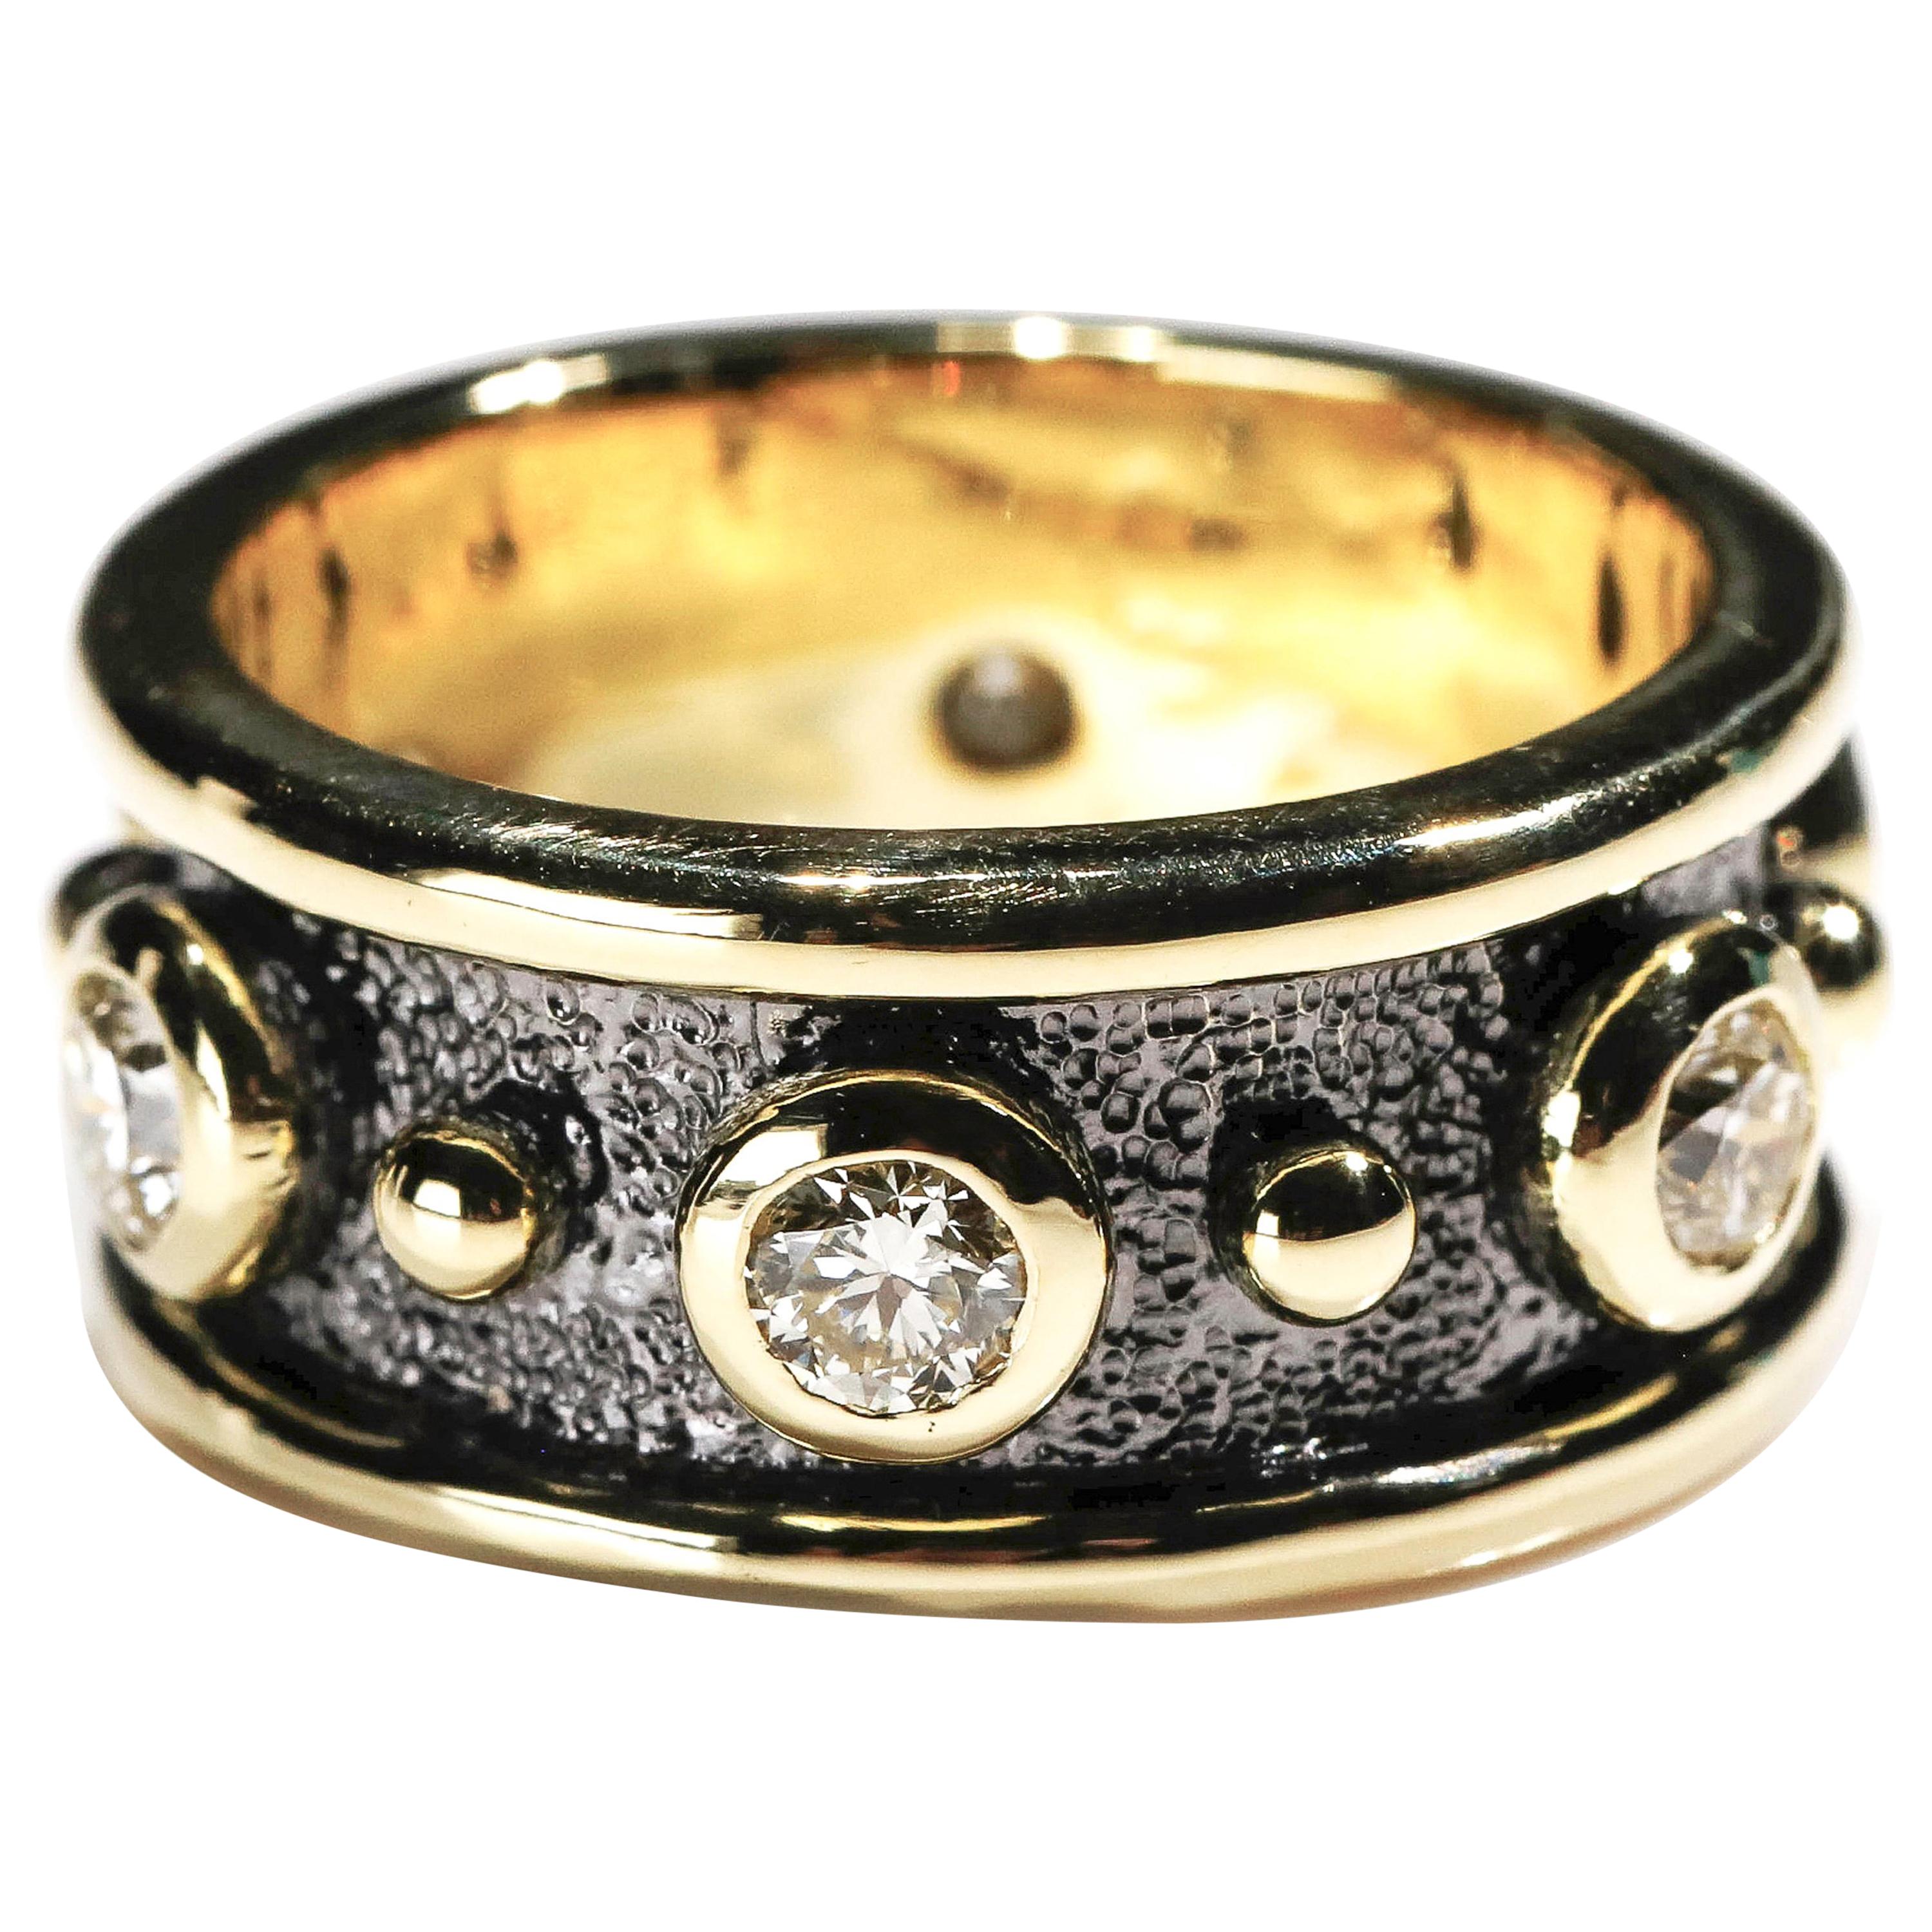 1.2 Carat Round Cut Diamond 18 Karat Yellow Gold Full Band Ring US Size 7 For Sale